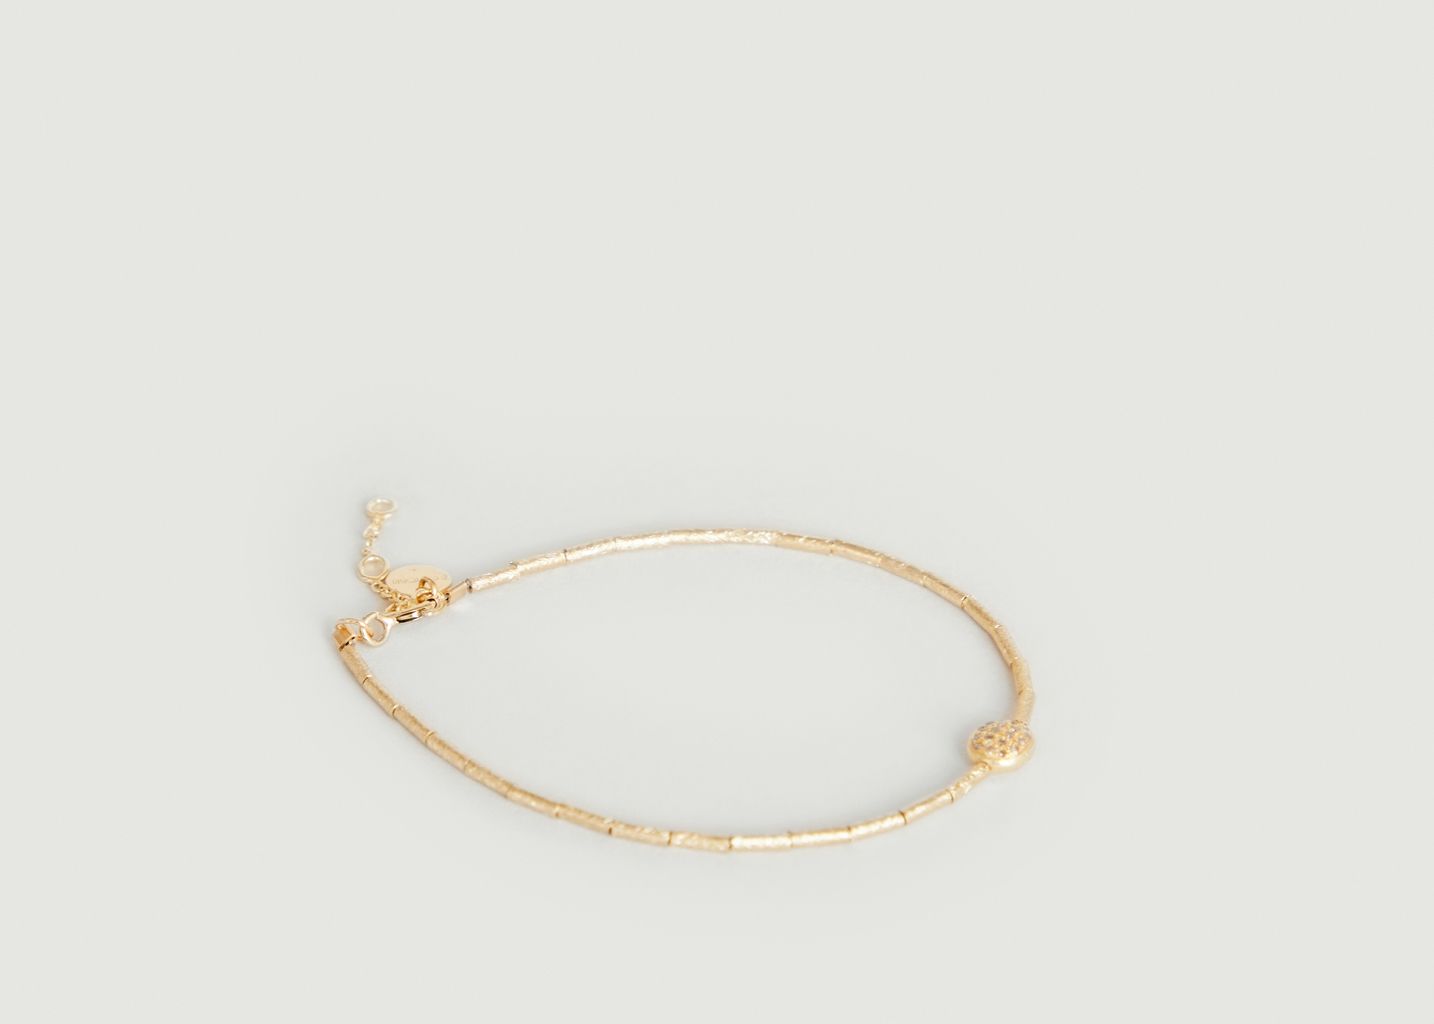 Bracelet Artus small gold - 5 Octobre